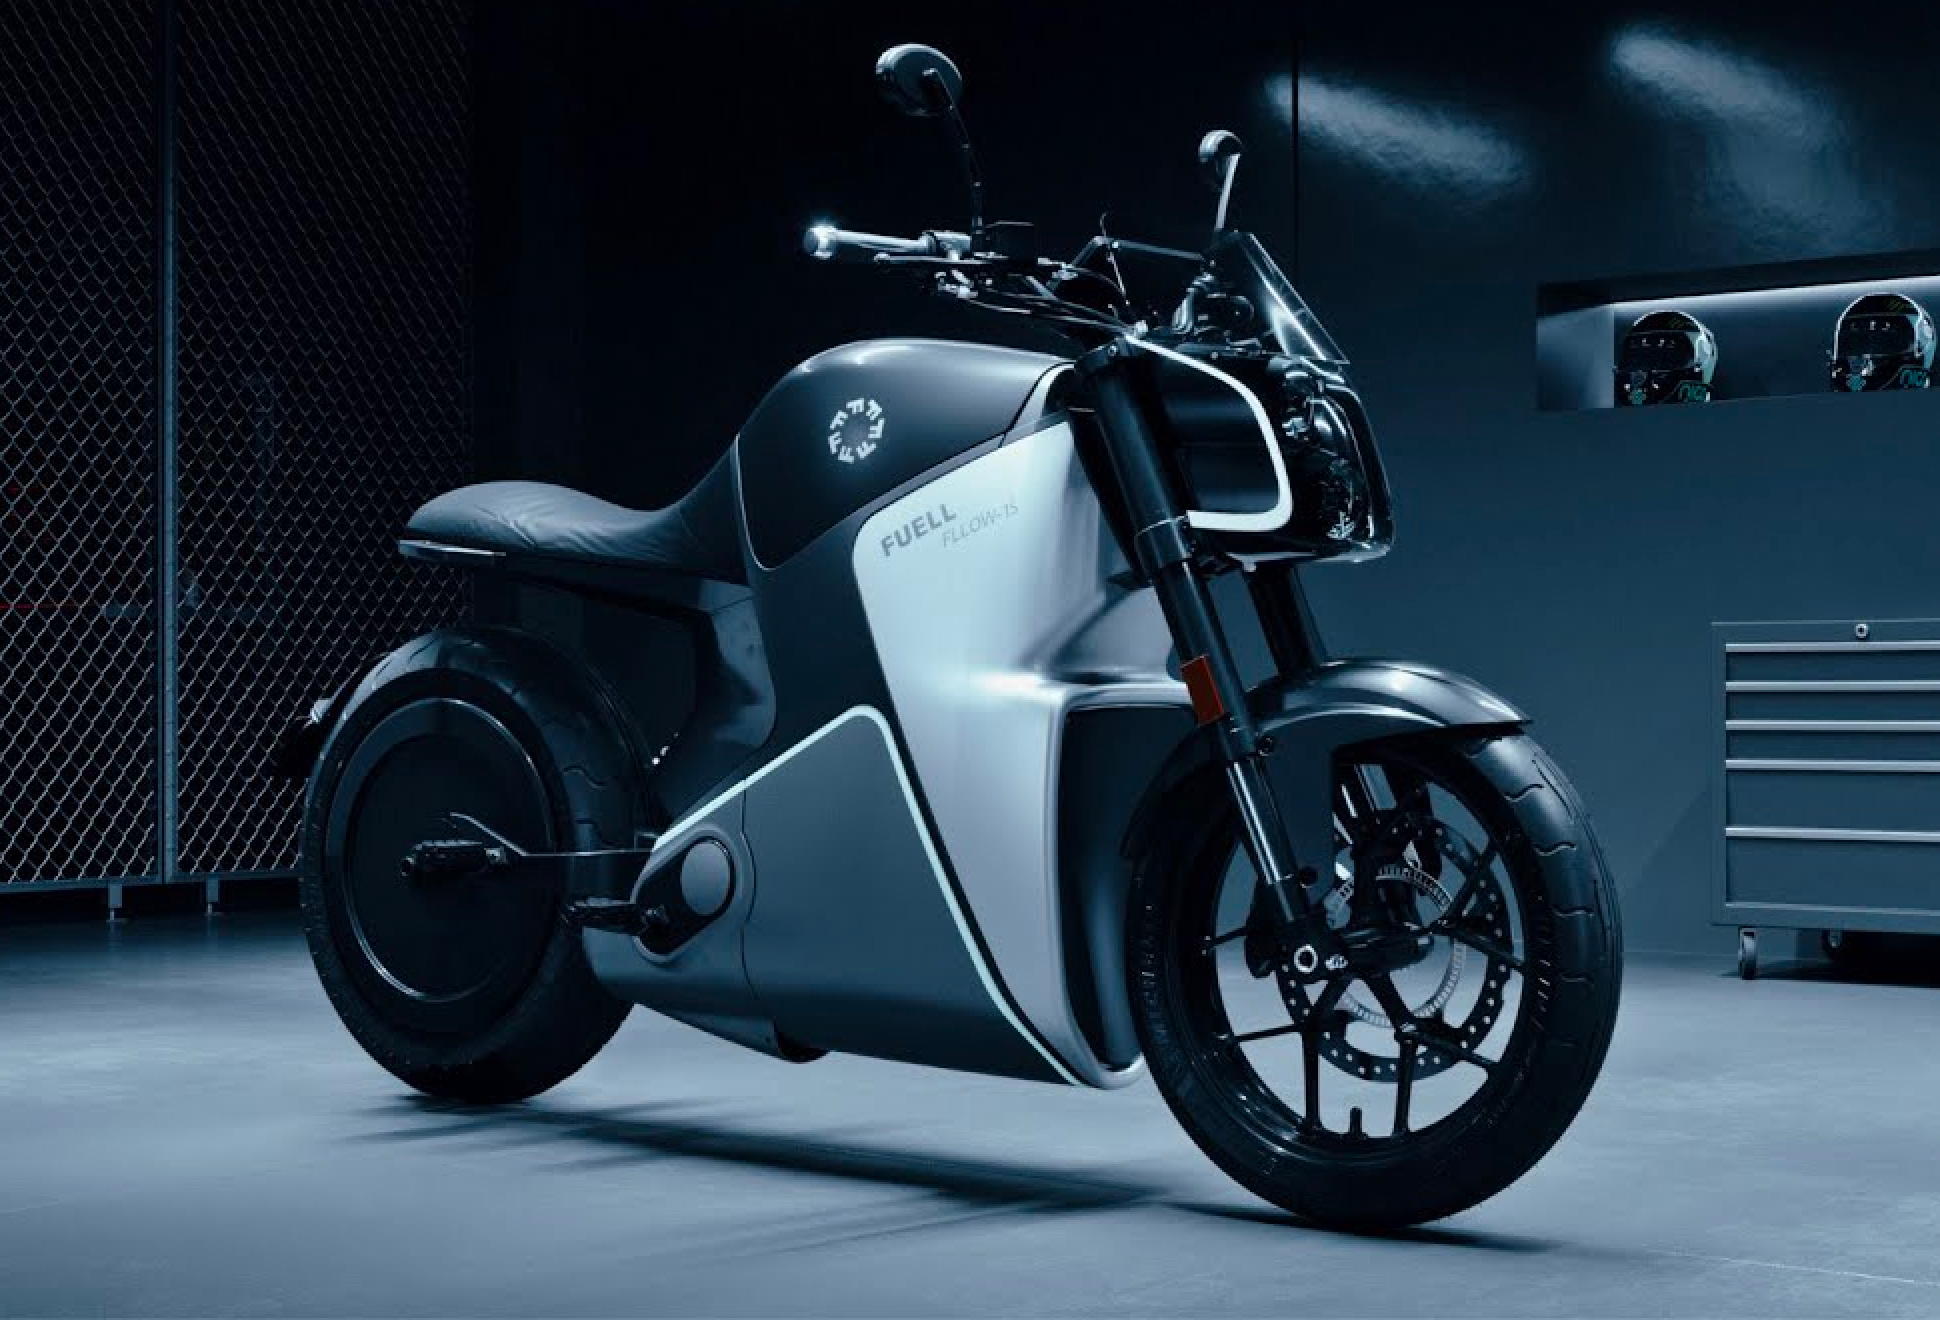 Fuell Fllow E-motorcycle: A Moto Elétrica Do Futuro | Image